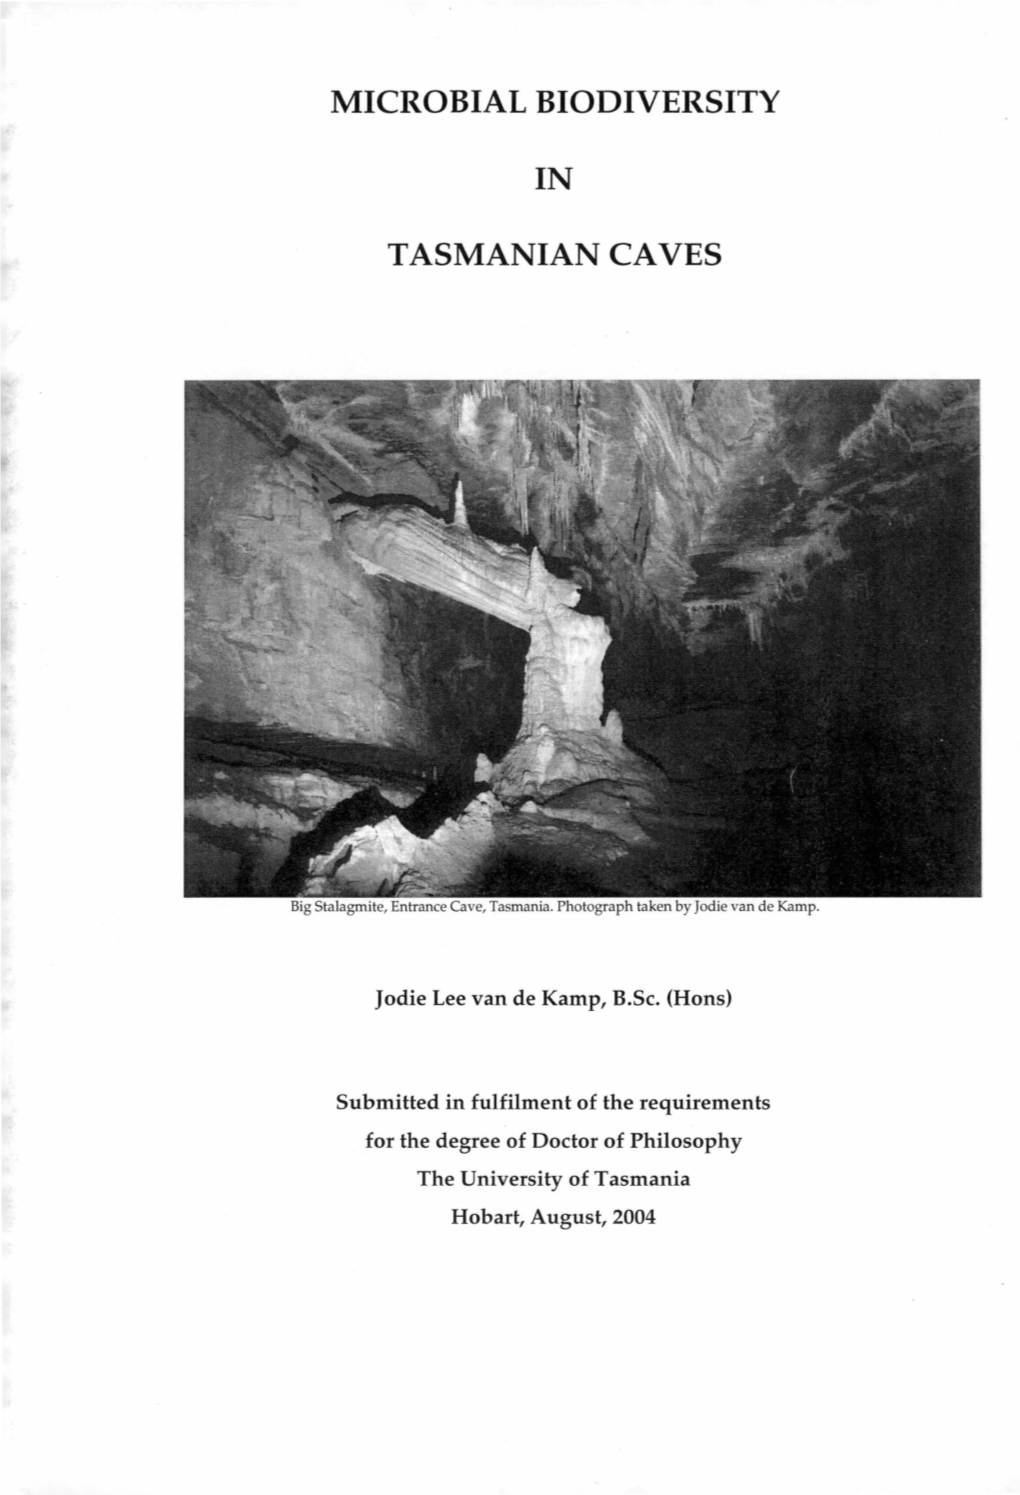 Microbial Biodiversity in Tasmanian Caves